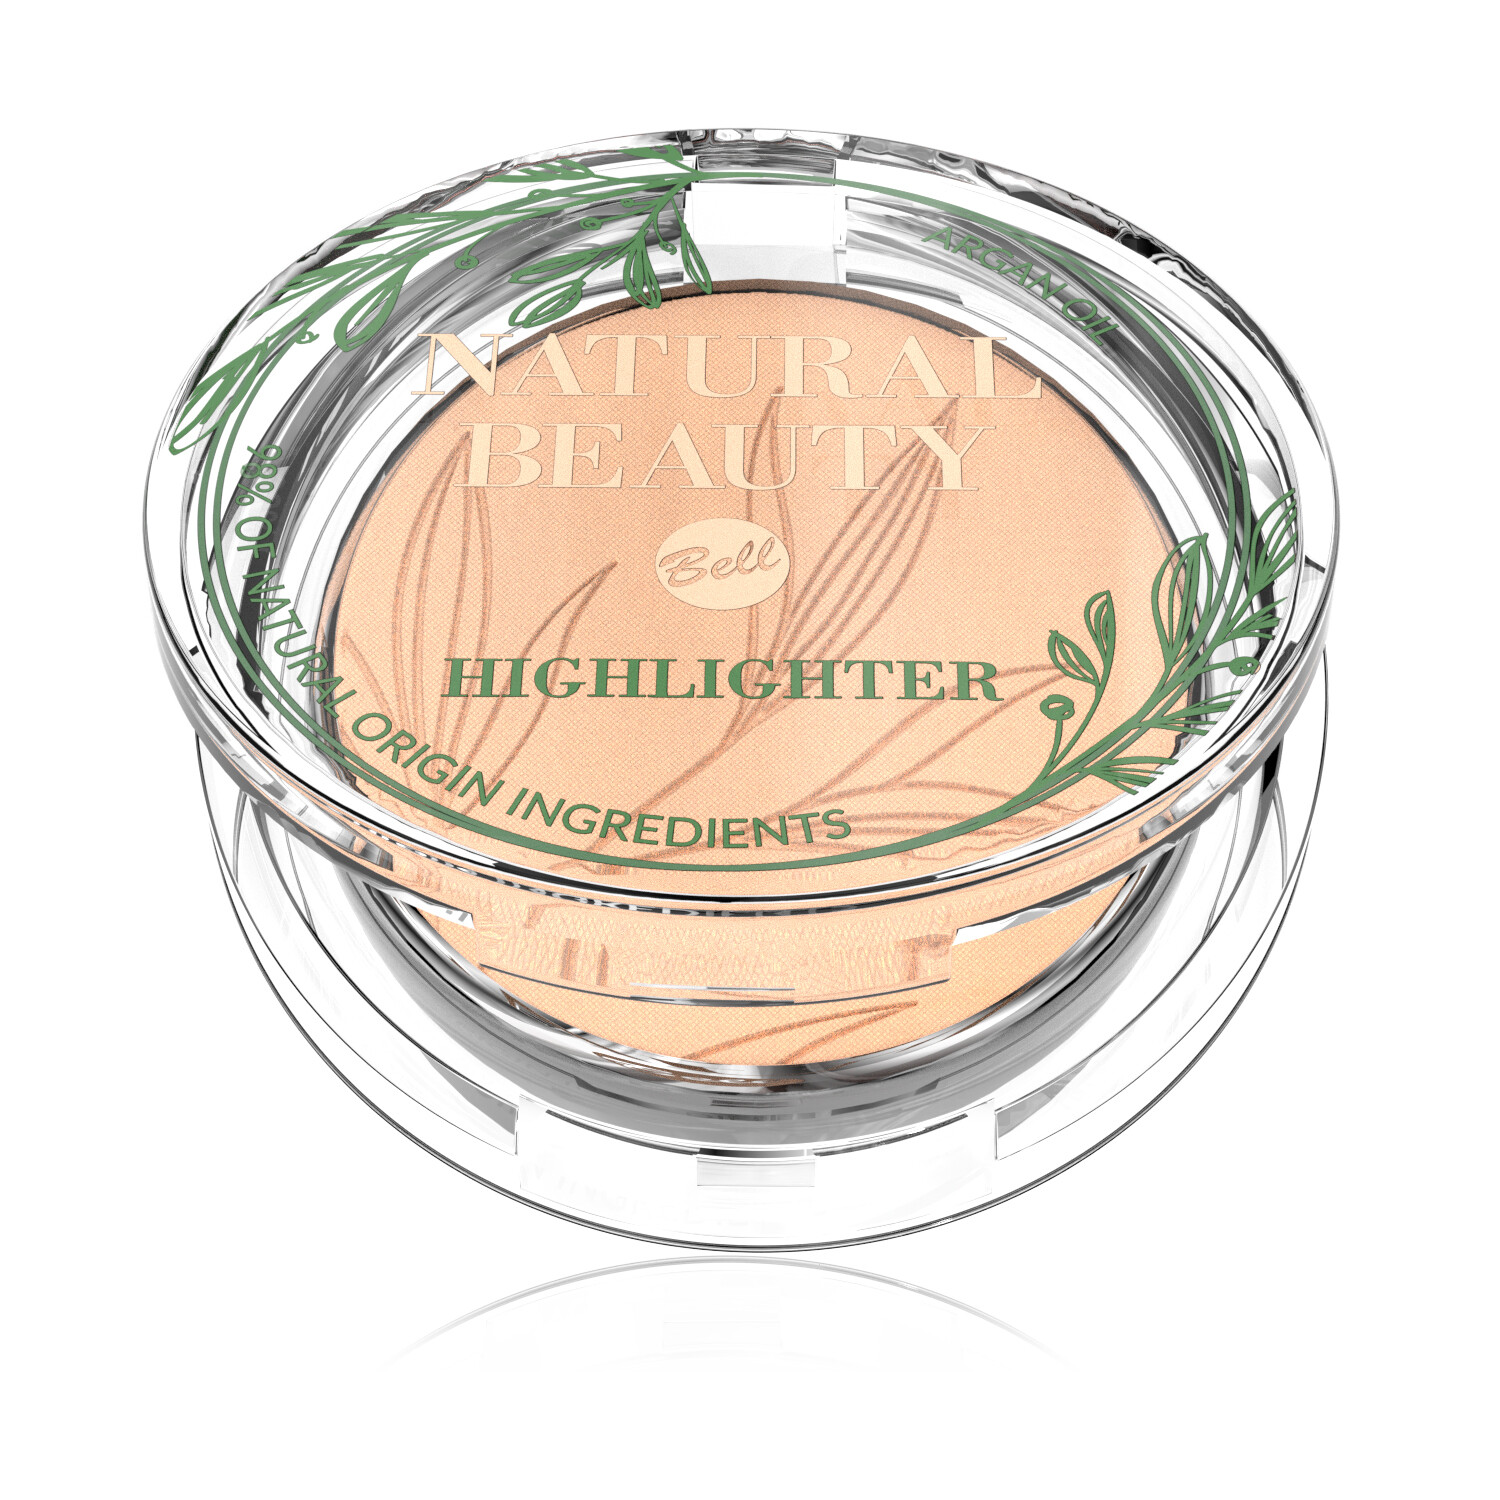 Švytinti pudra su argano aliejumi  Highlighter Natural Beauty Bell, 6 g